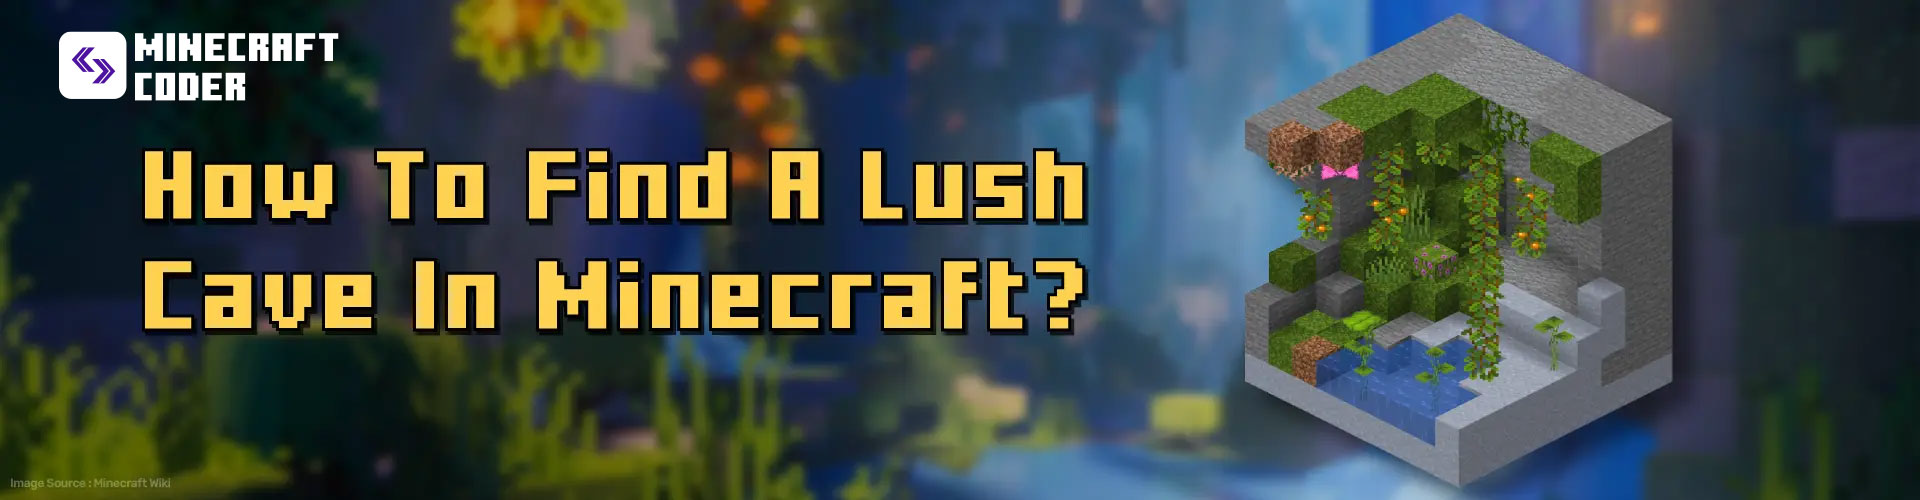 Lush Cave In Minecraft